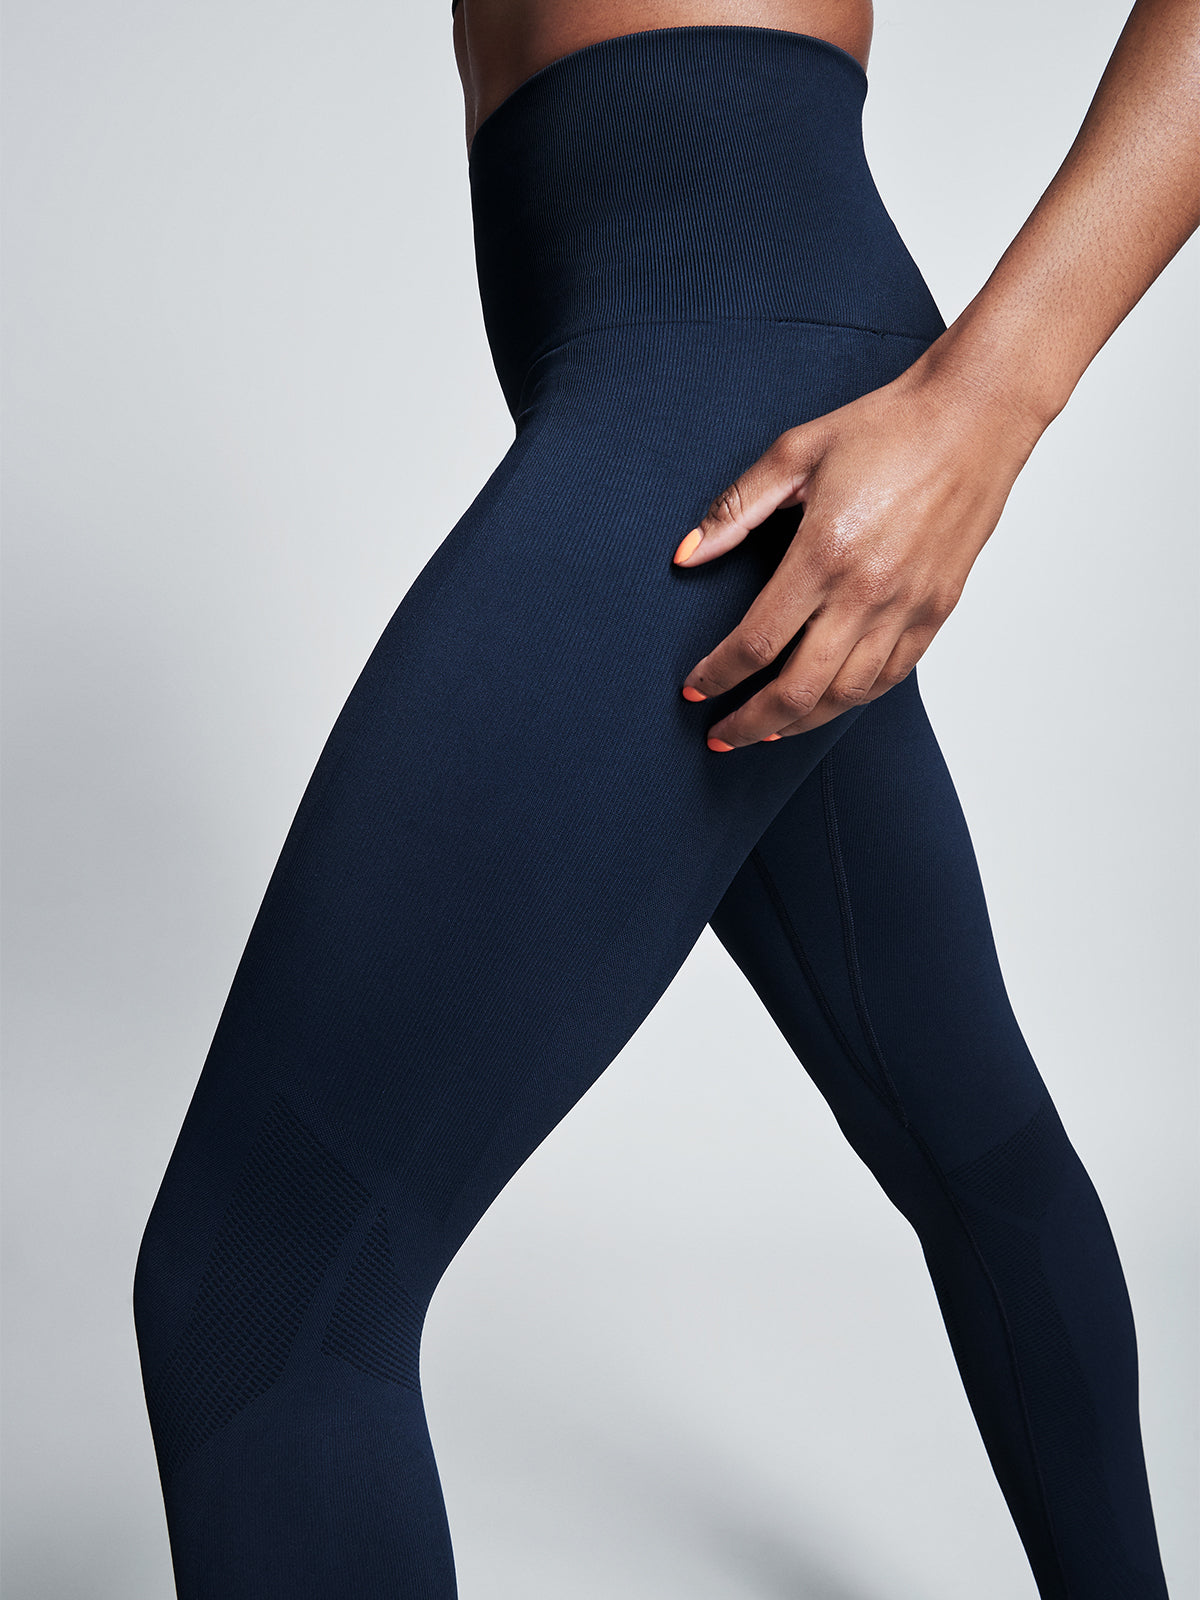 LNDR Leggings Sculpted Pants Deep Blue Compression High Waist Womens S/M  $128